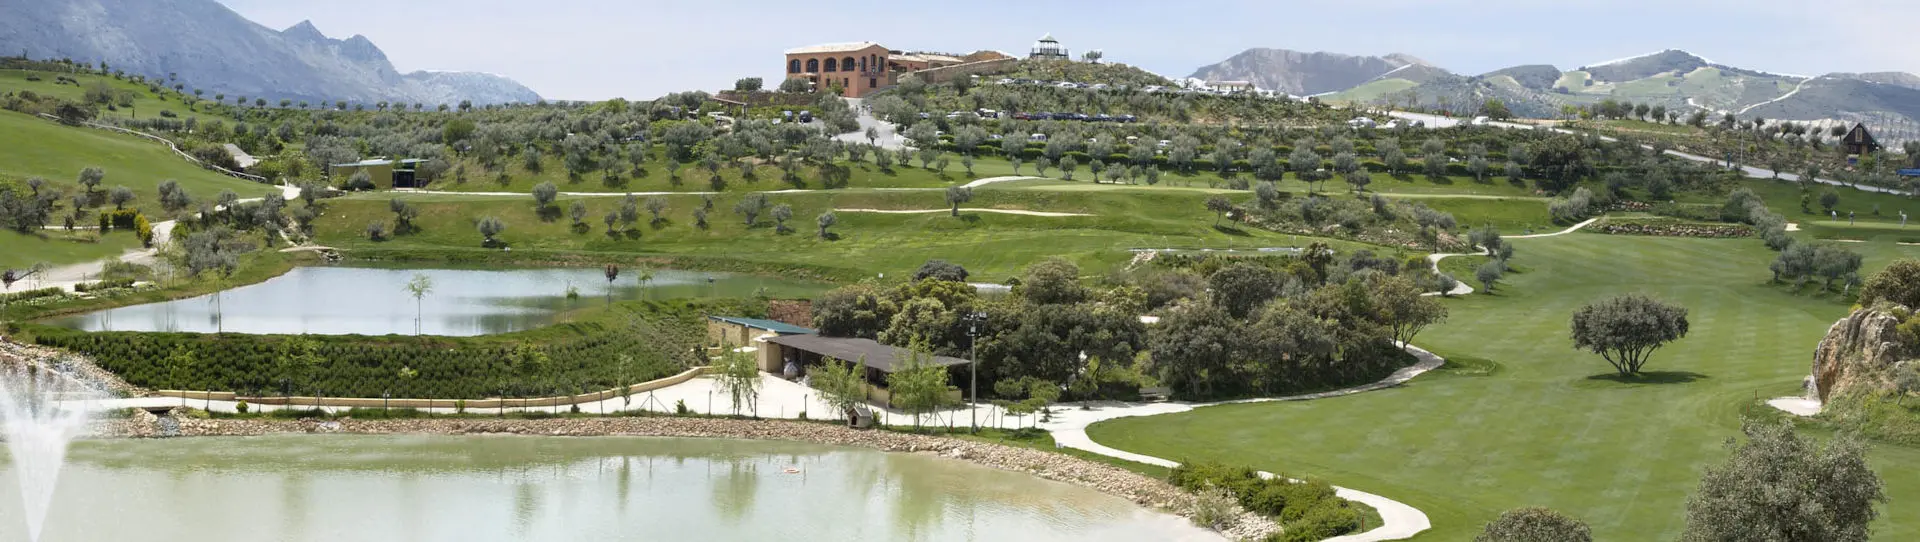 Spain golf courses - Antequera Golf - Photo 1